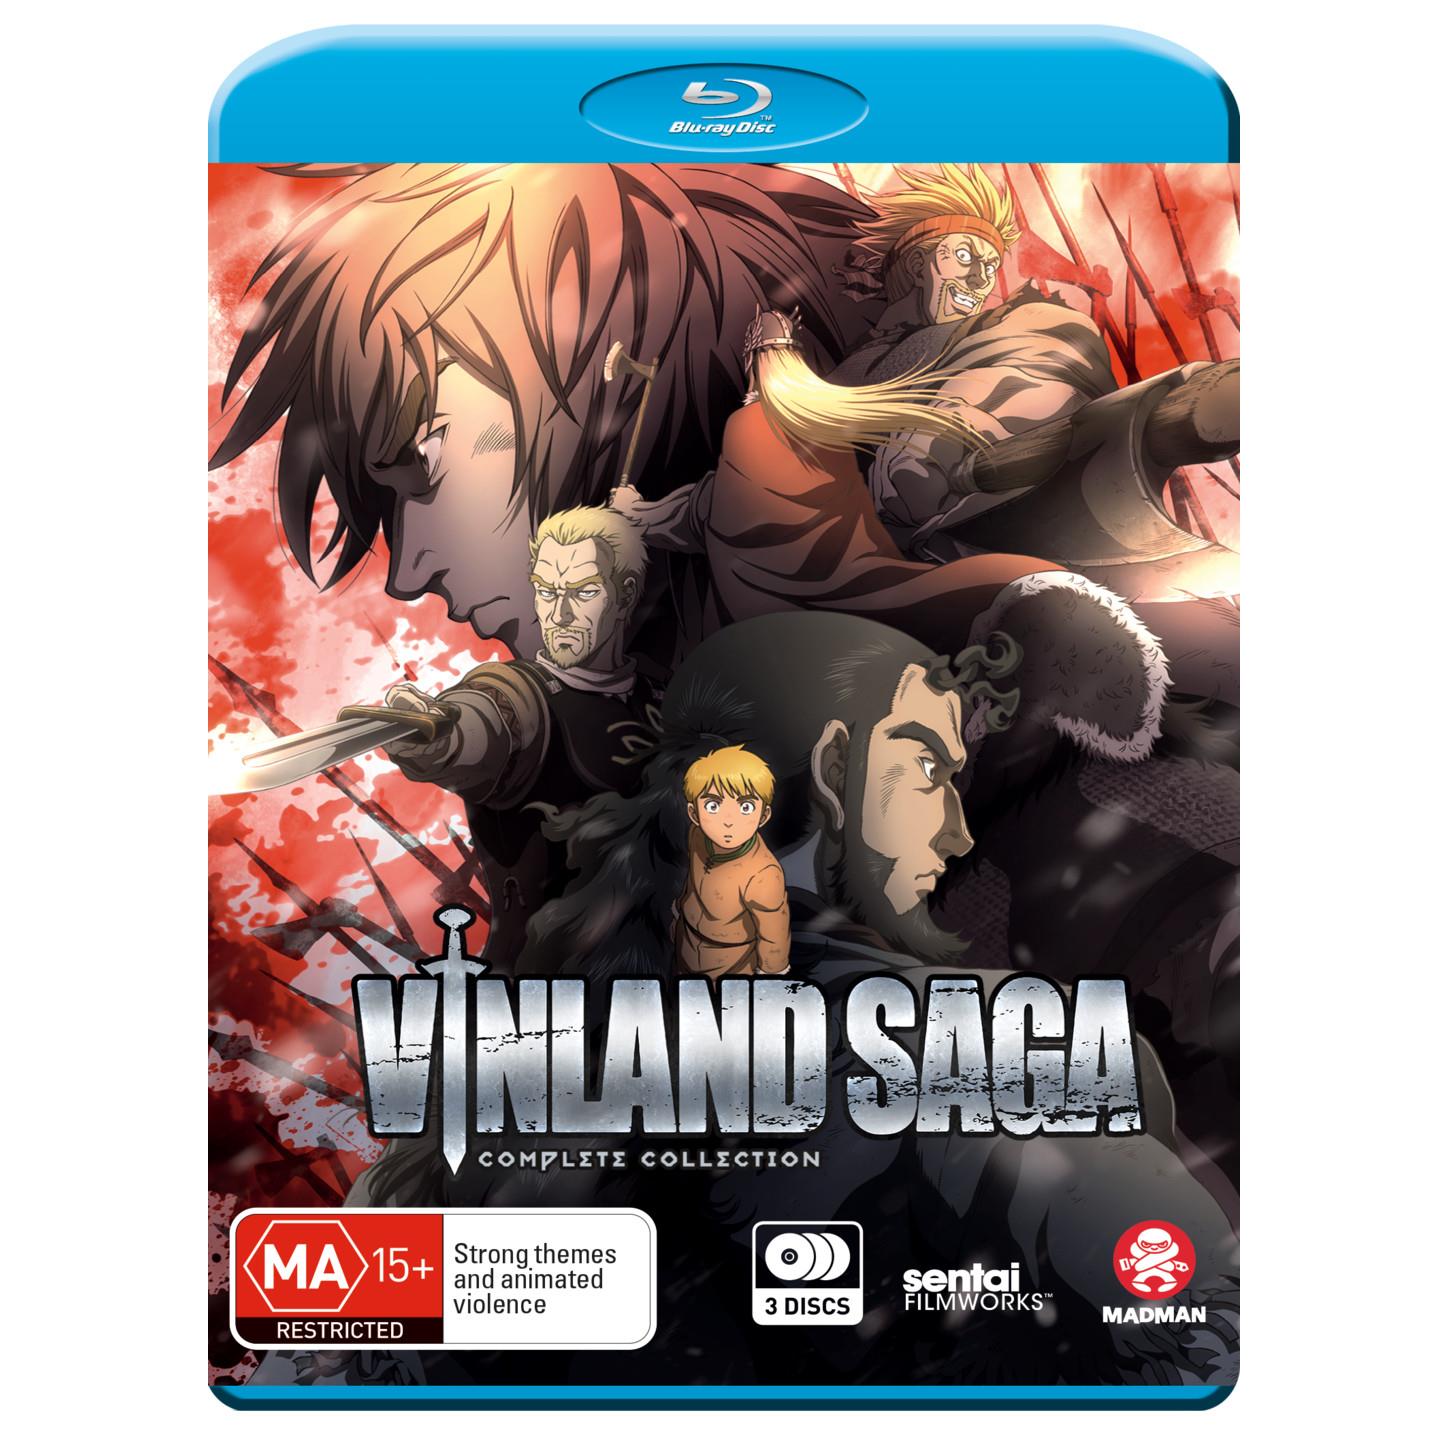 Vinland Saga: ready for the anime? - Seekers of Atlantis